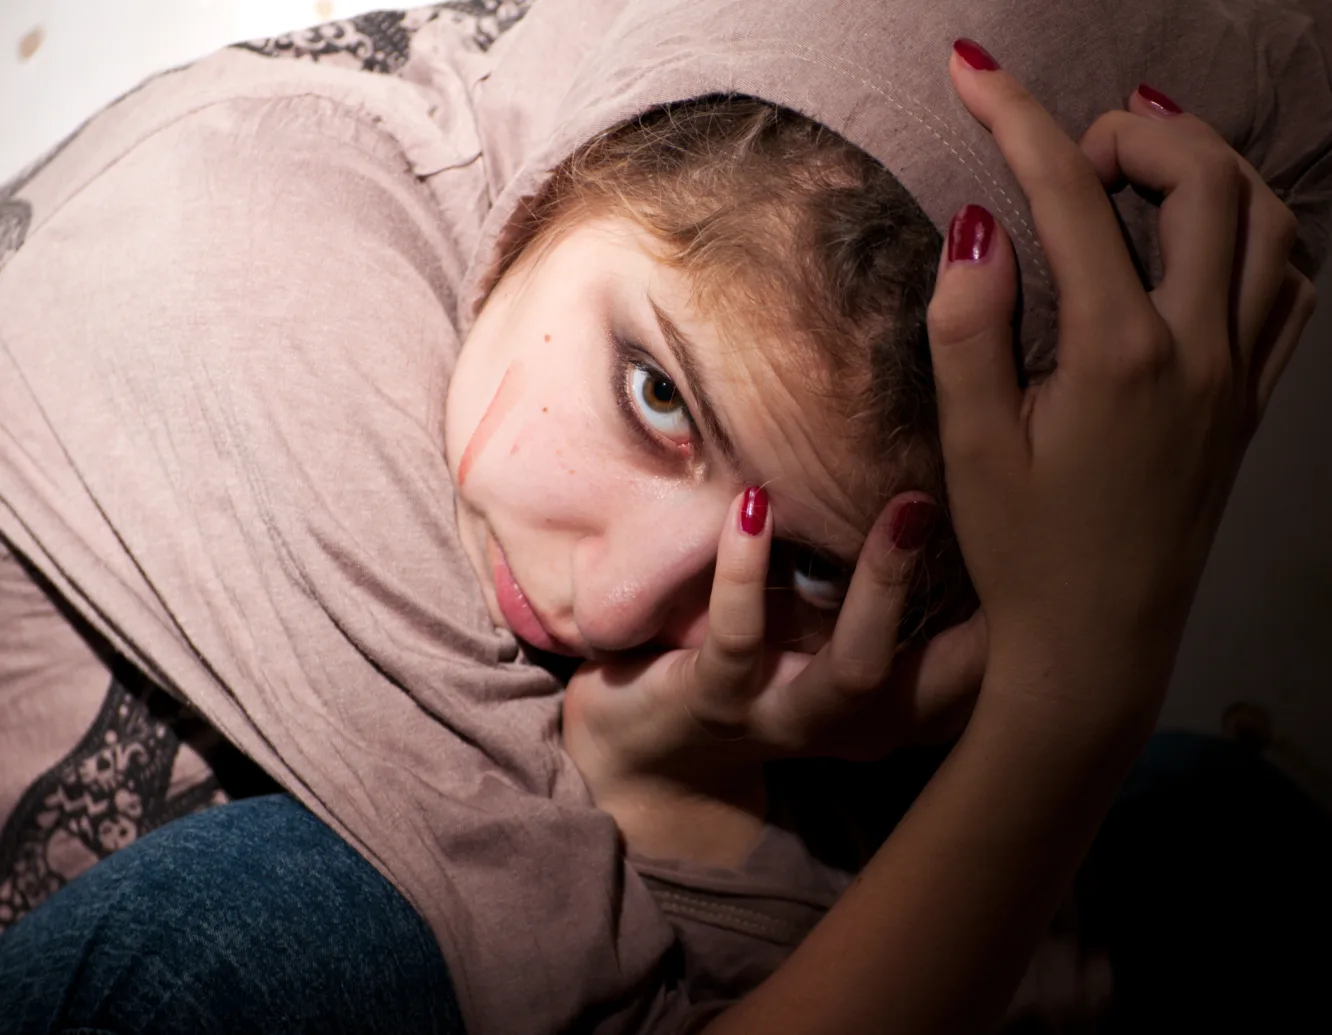 2393476 teenage problems loneliness violence depression